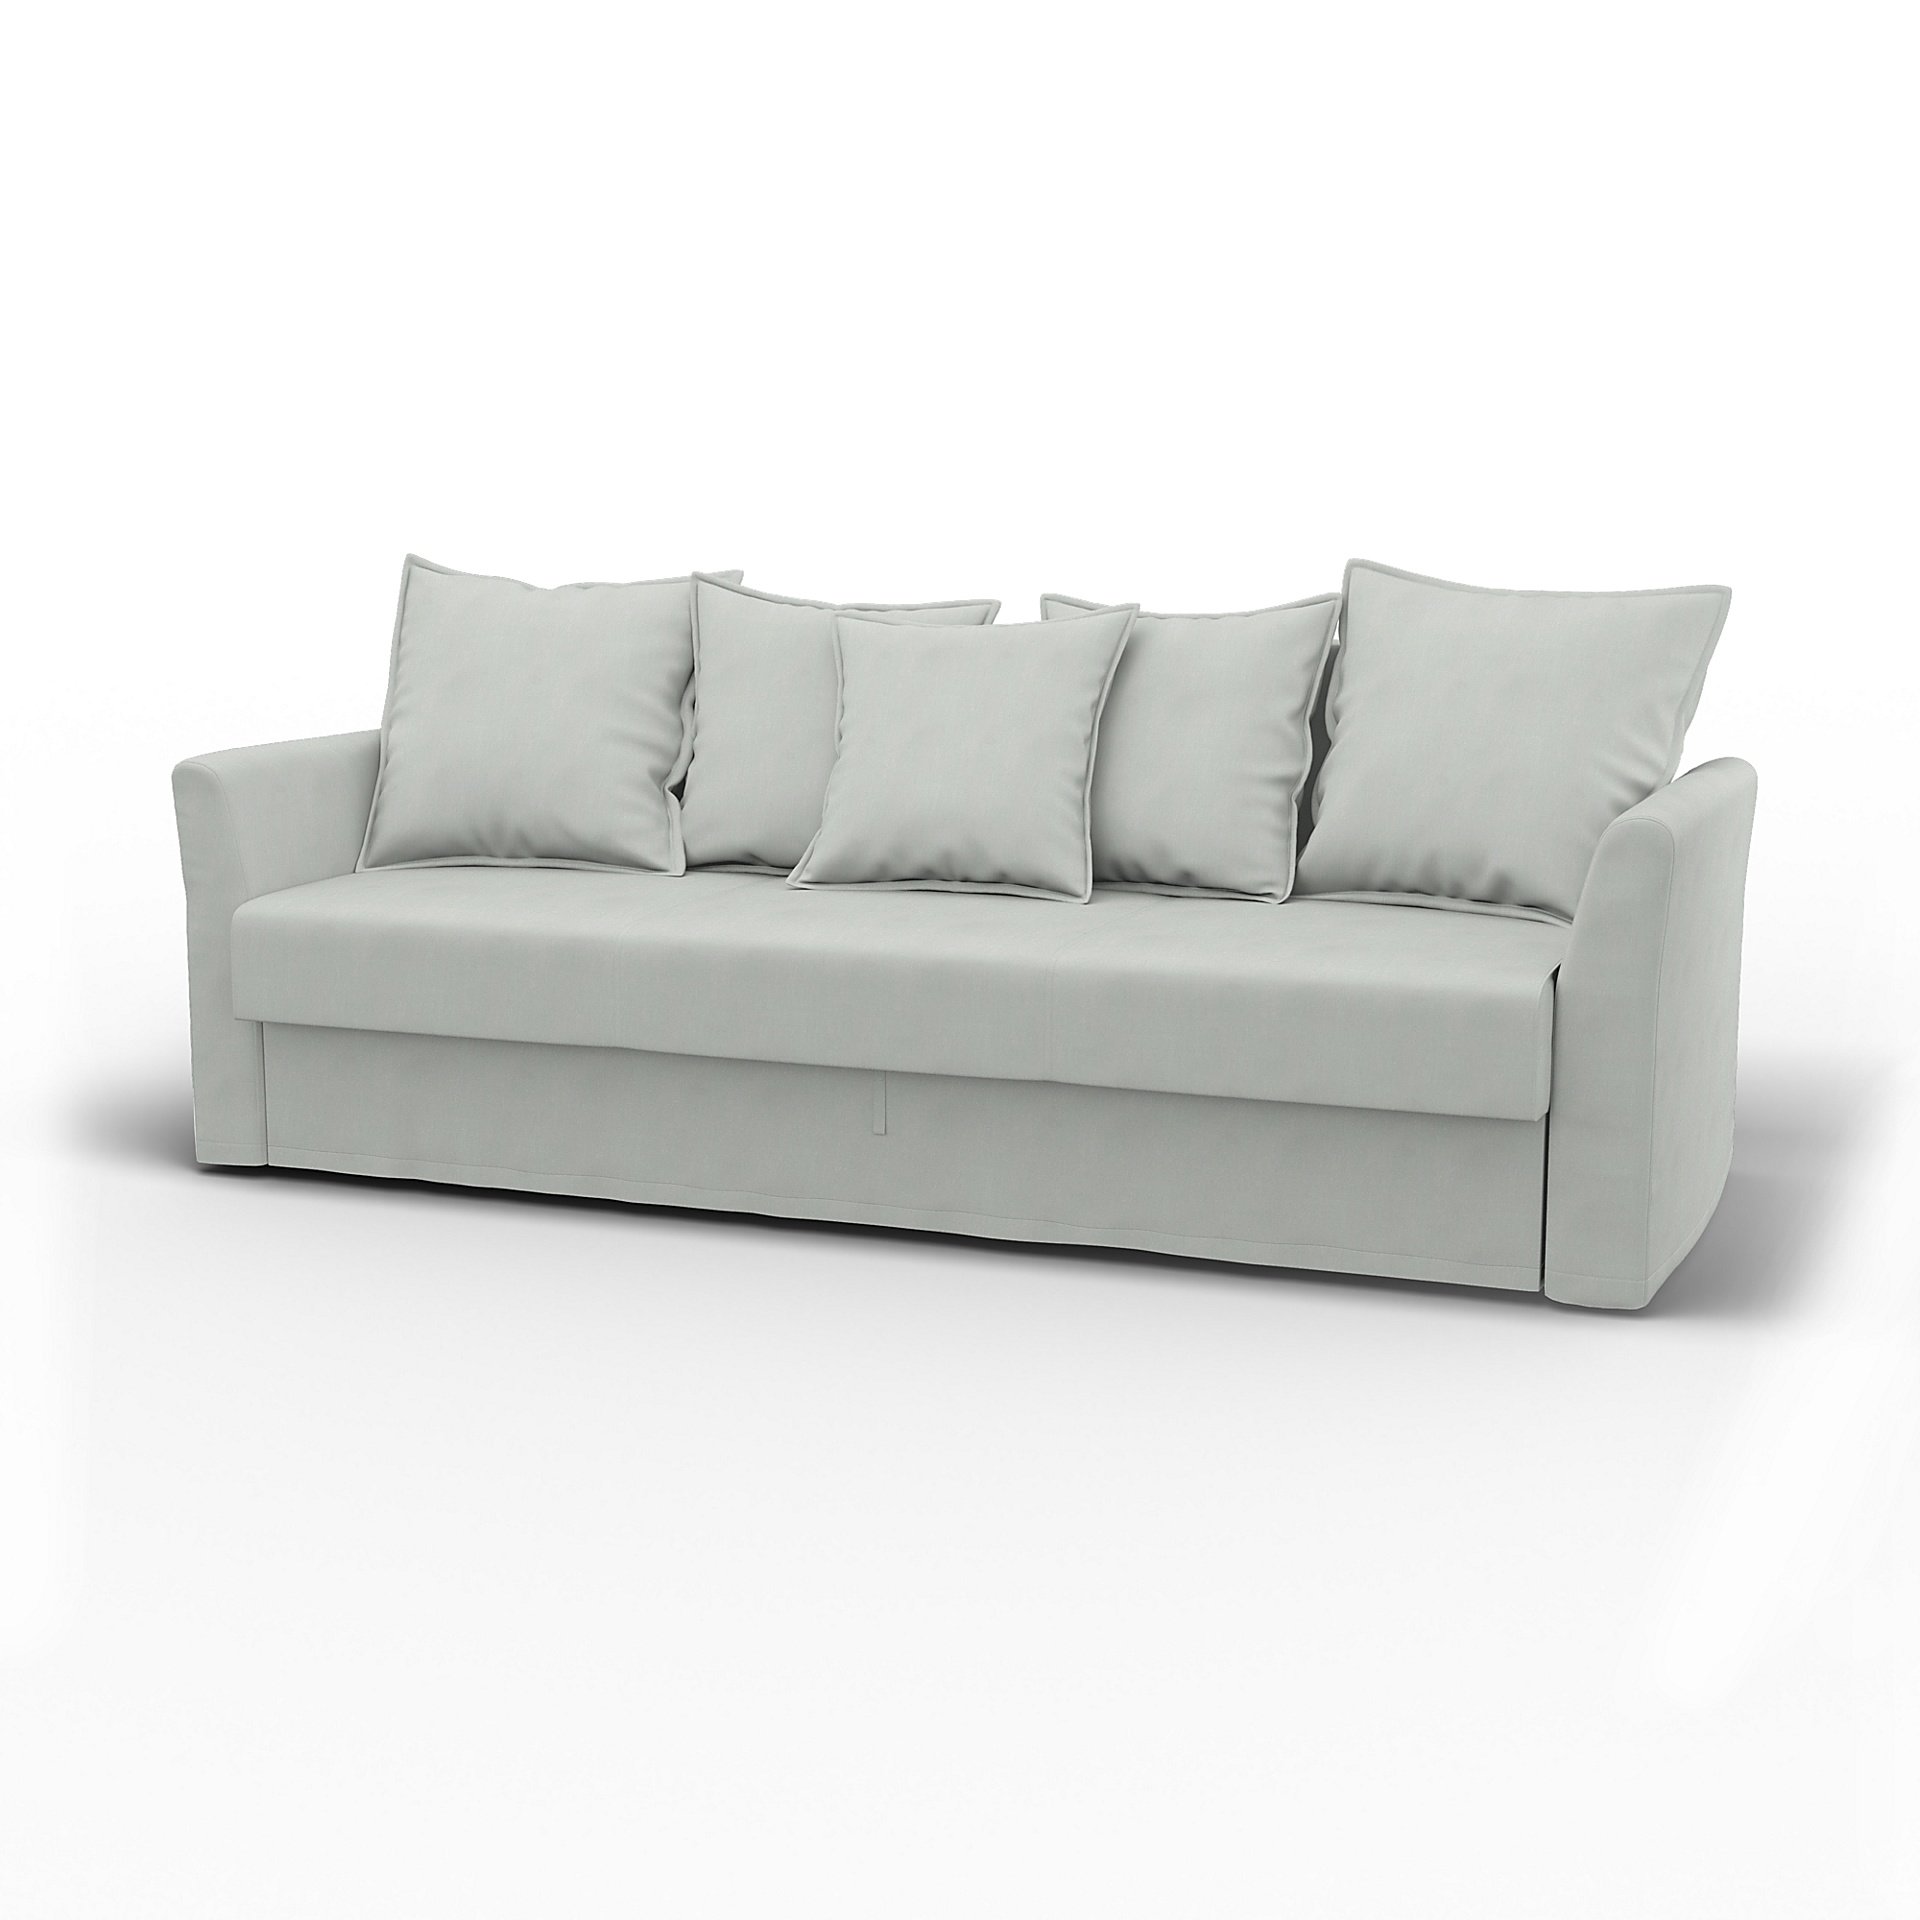 IKEA - Holmsund Sofabed, Silver Grey, Linen - Bemz